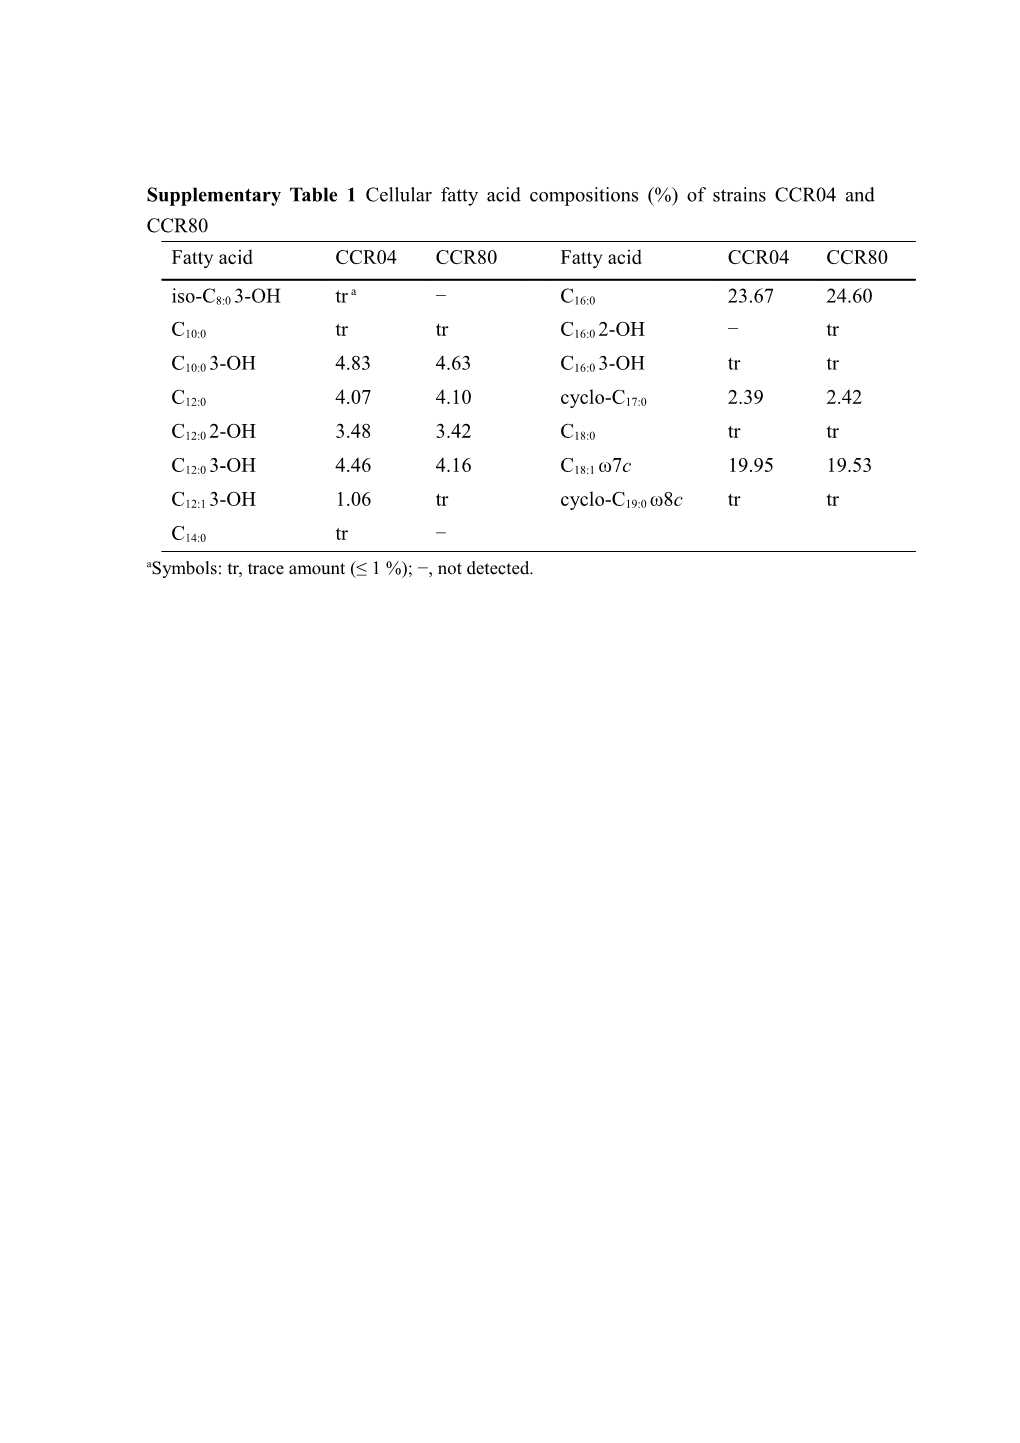 Table 1 Biocontrol Activity of Pseudomonas Corrugata Strain CCR04 and CCR80 on Final Disease